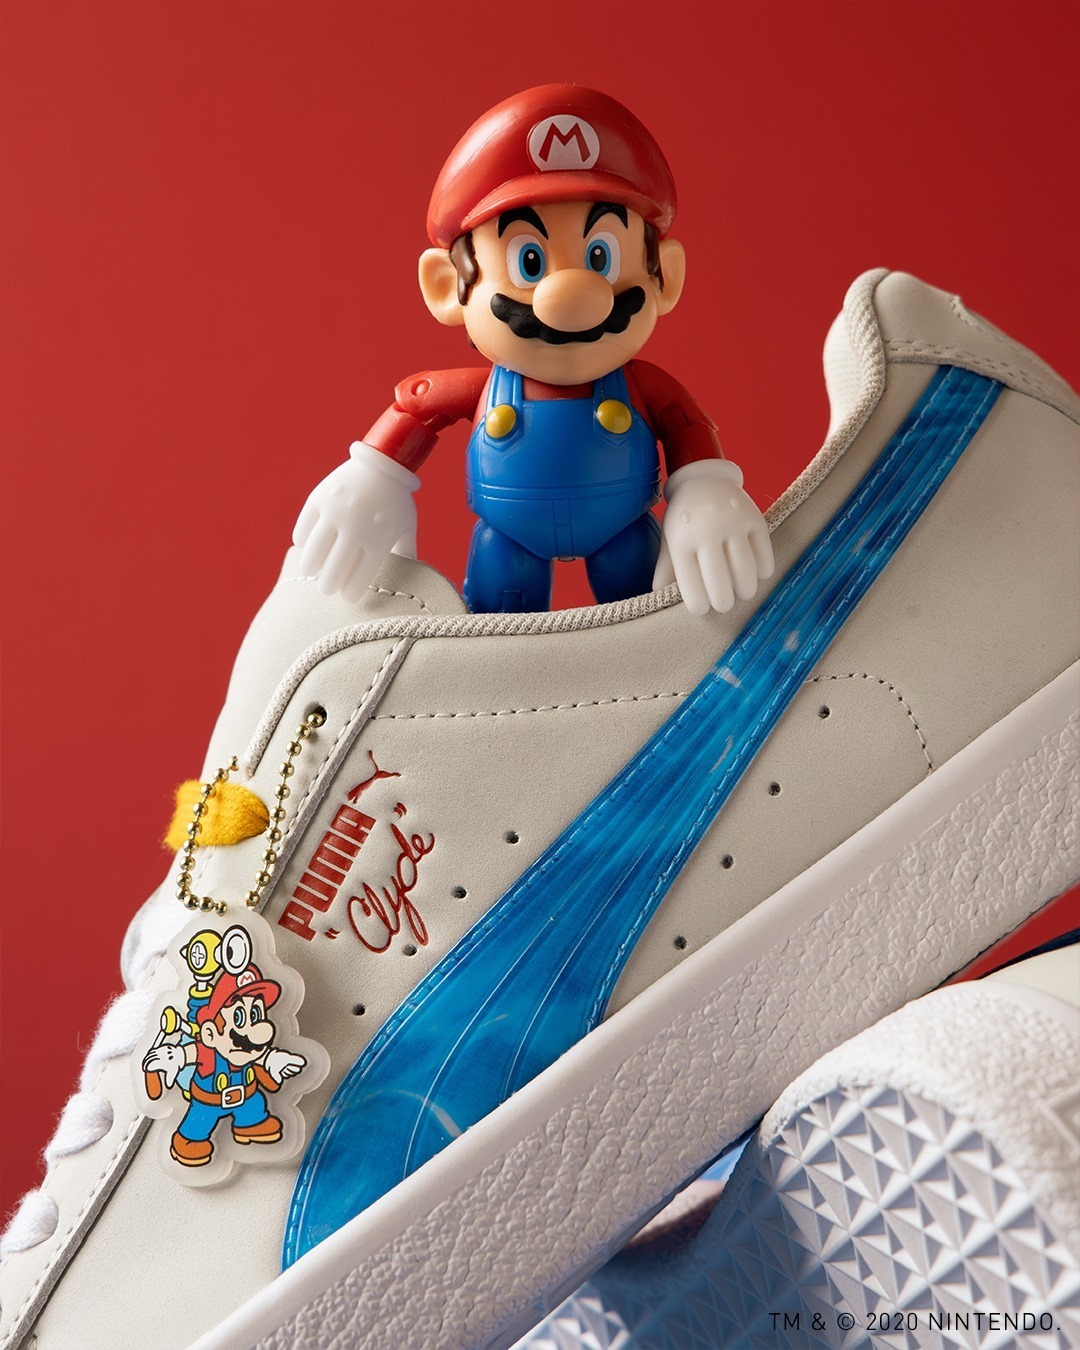 PUMA - It's-a Mario!